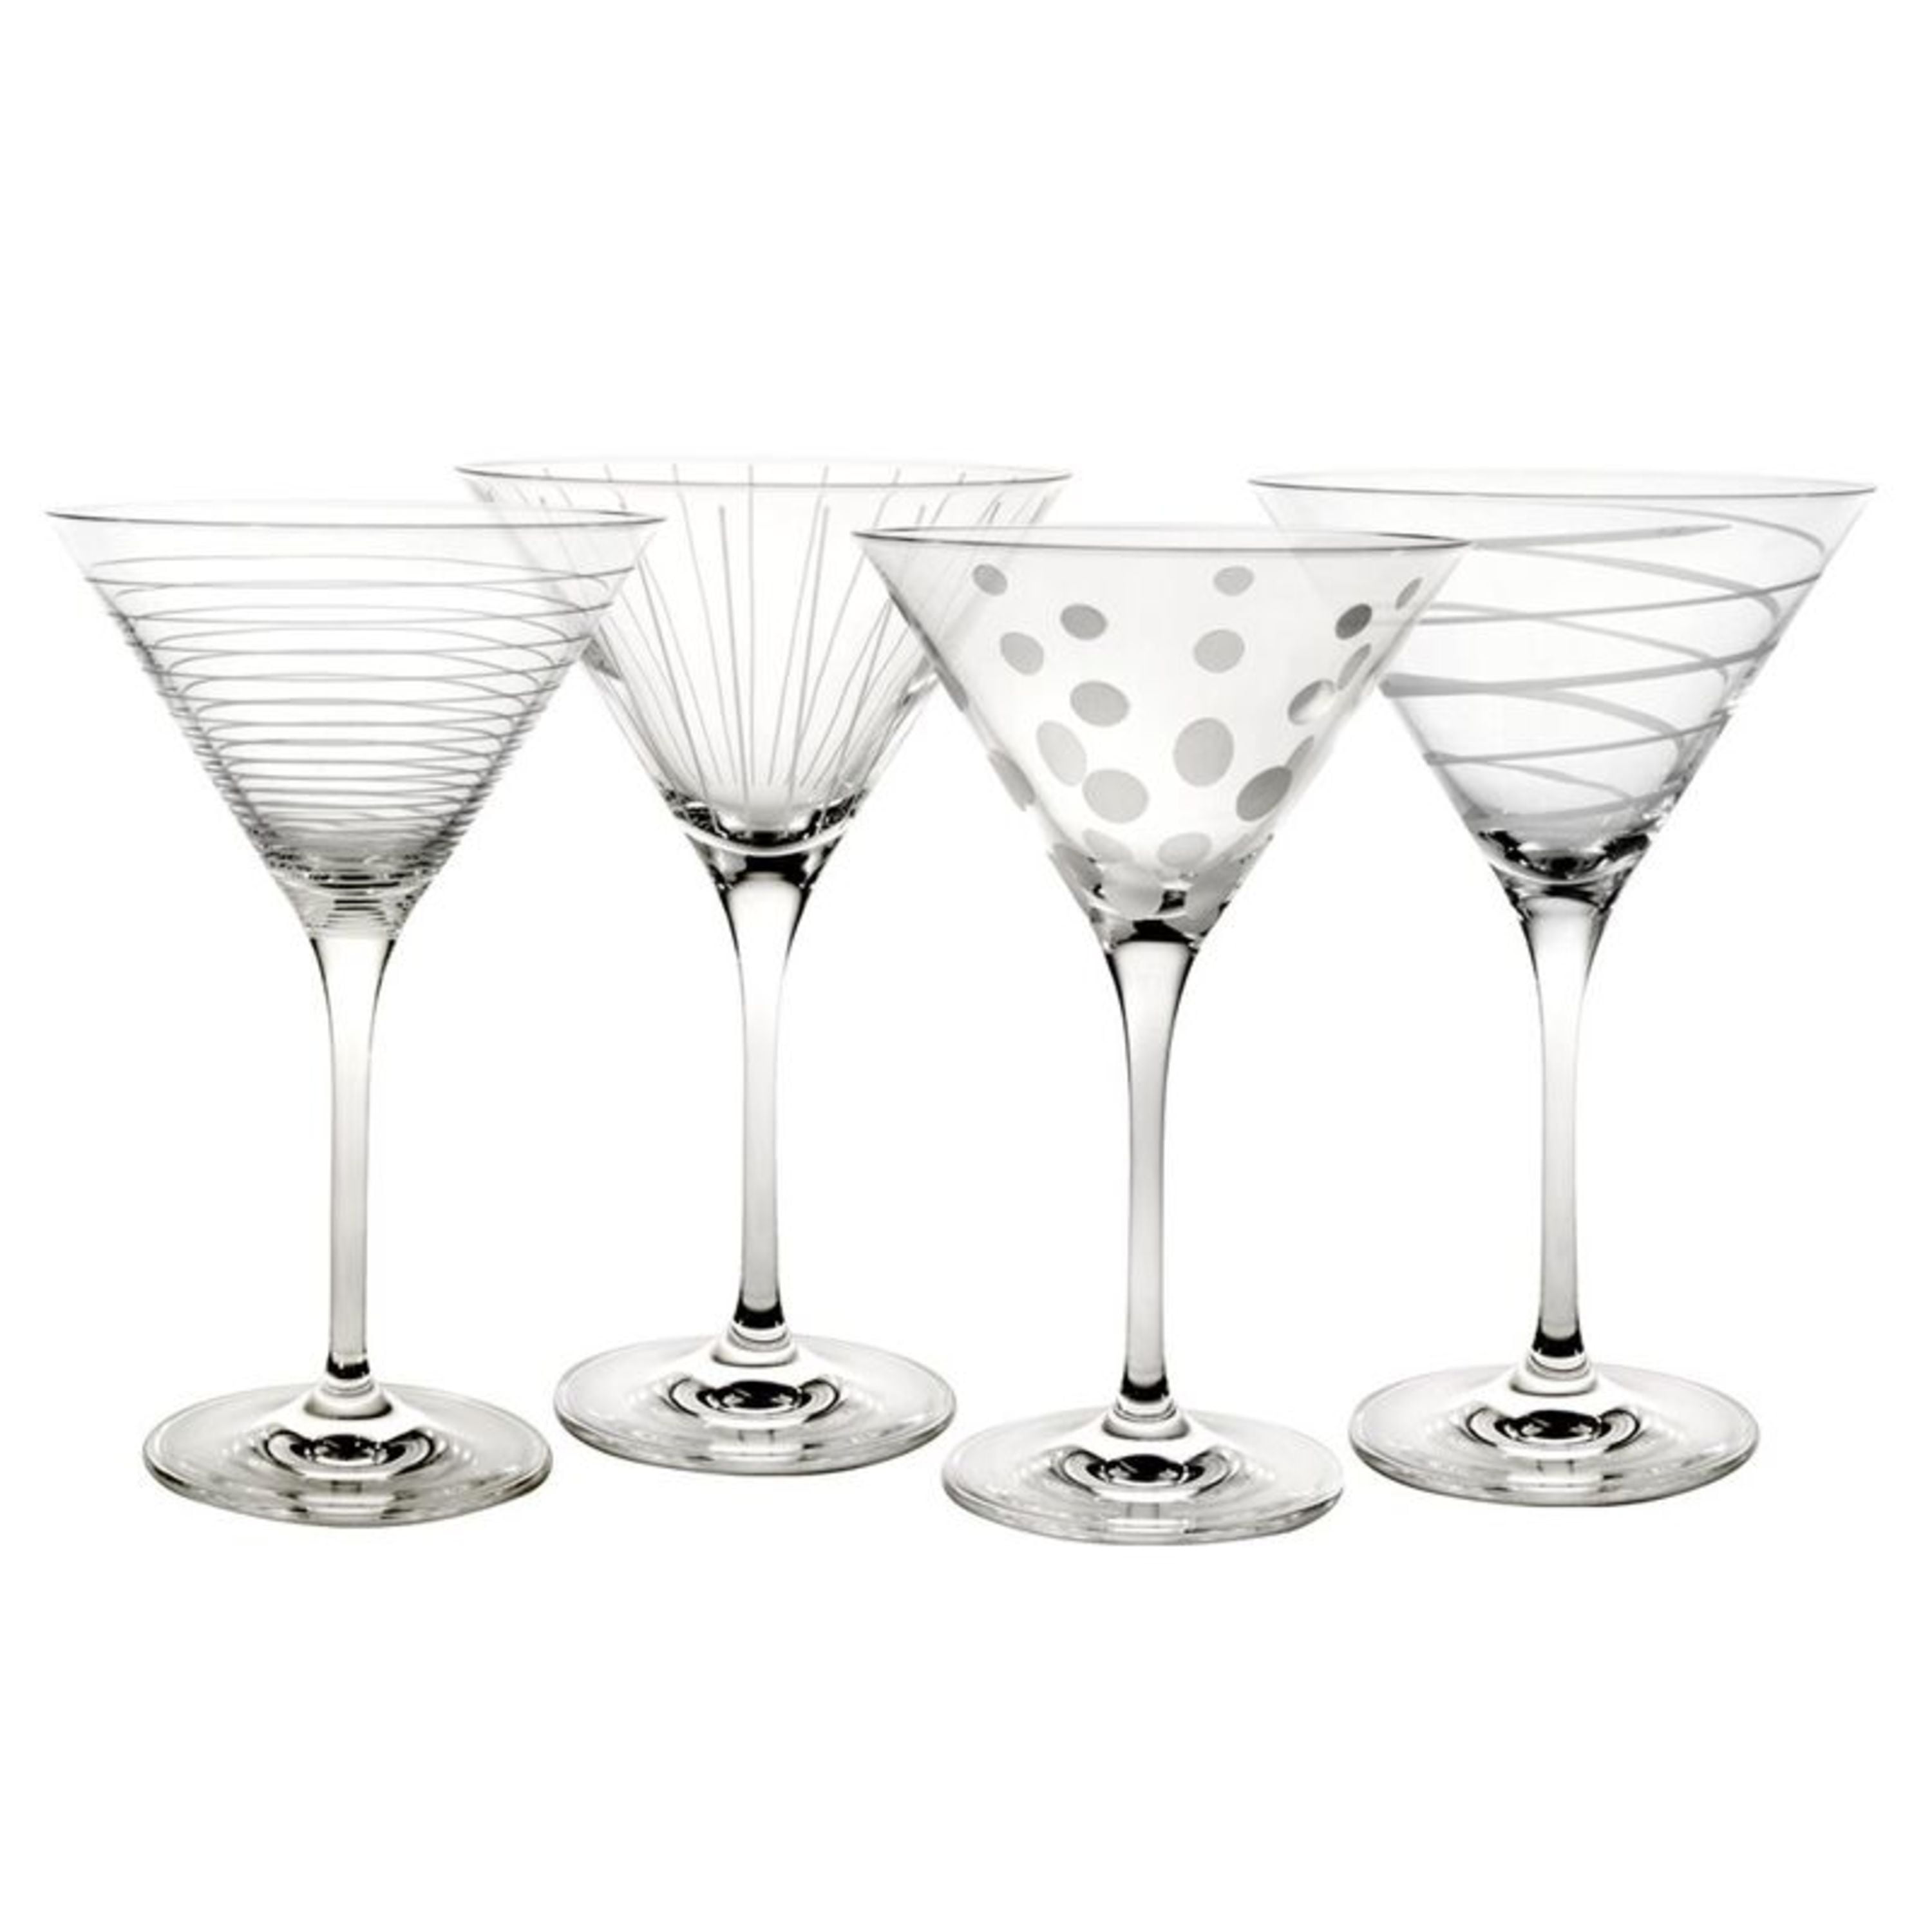 Vikko Martini Glasses Set of 12, Crystal Clear 6 Ounce Martini Glasses with Stem, Elegant Glasses for Martini, Vodka, Cocktail